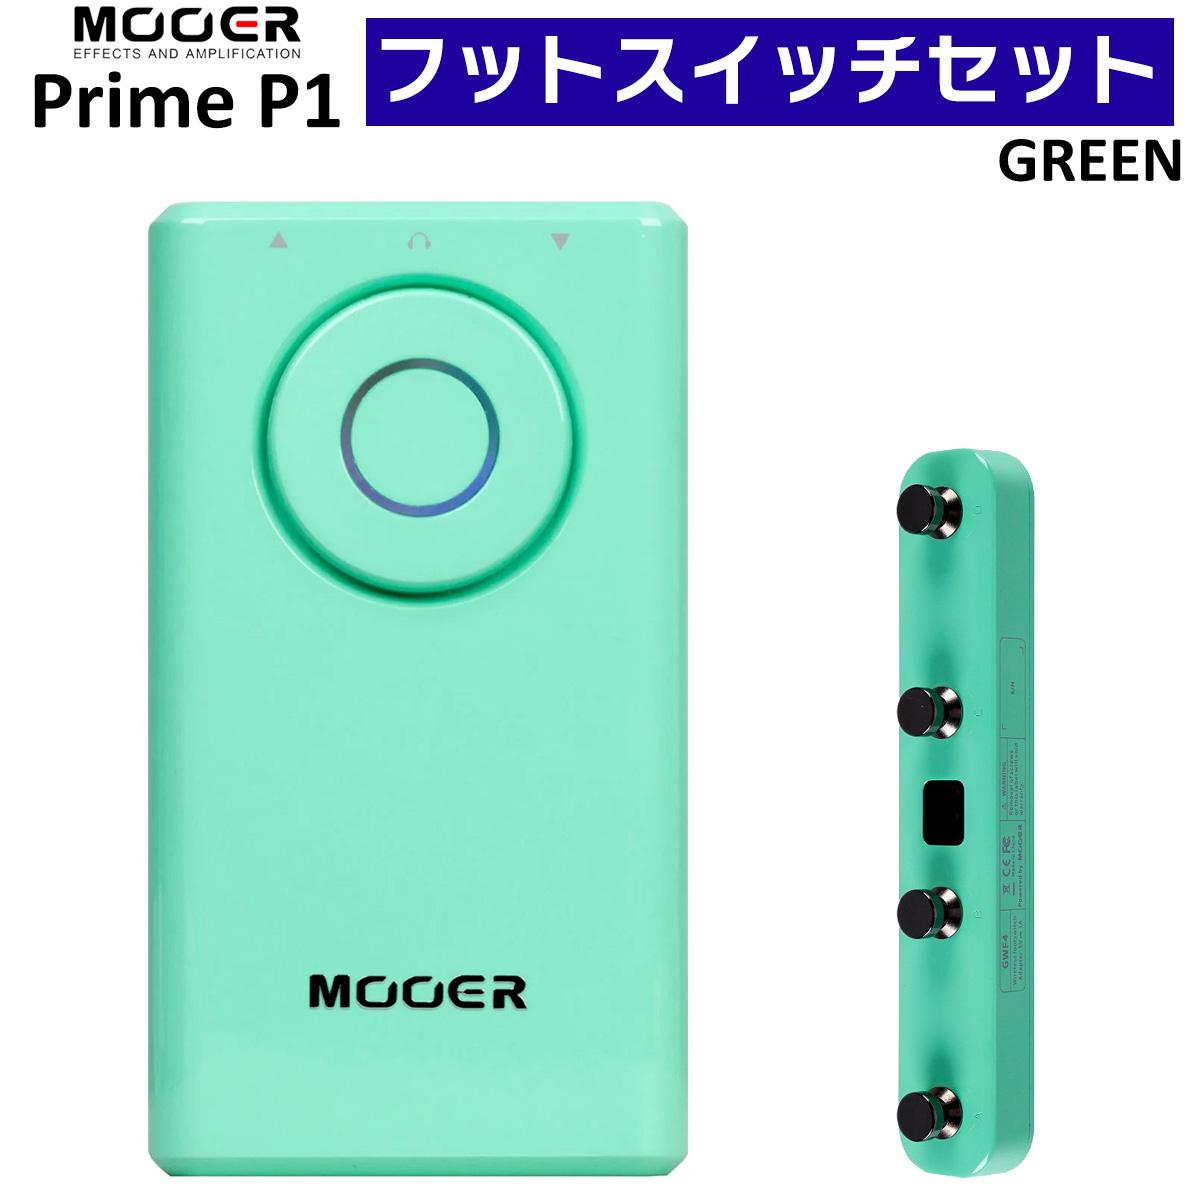 MOOER Prime P1 GREEN + GWF4 フットスイッチセット 超小型マルチ ...